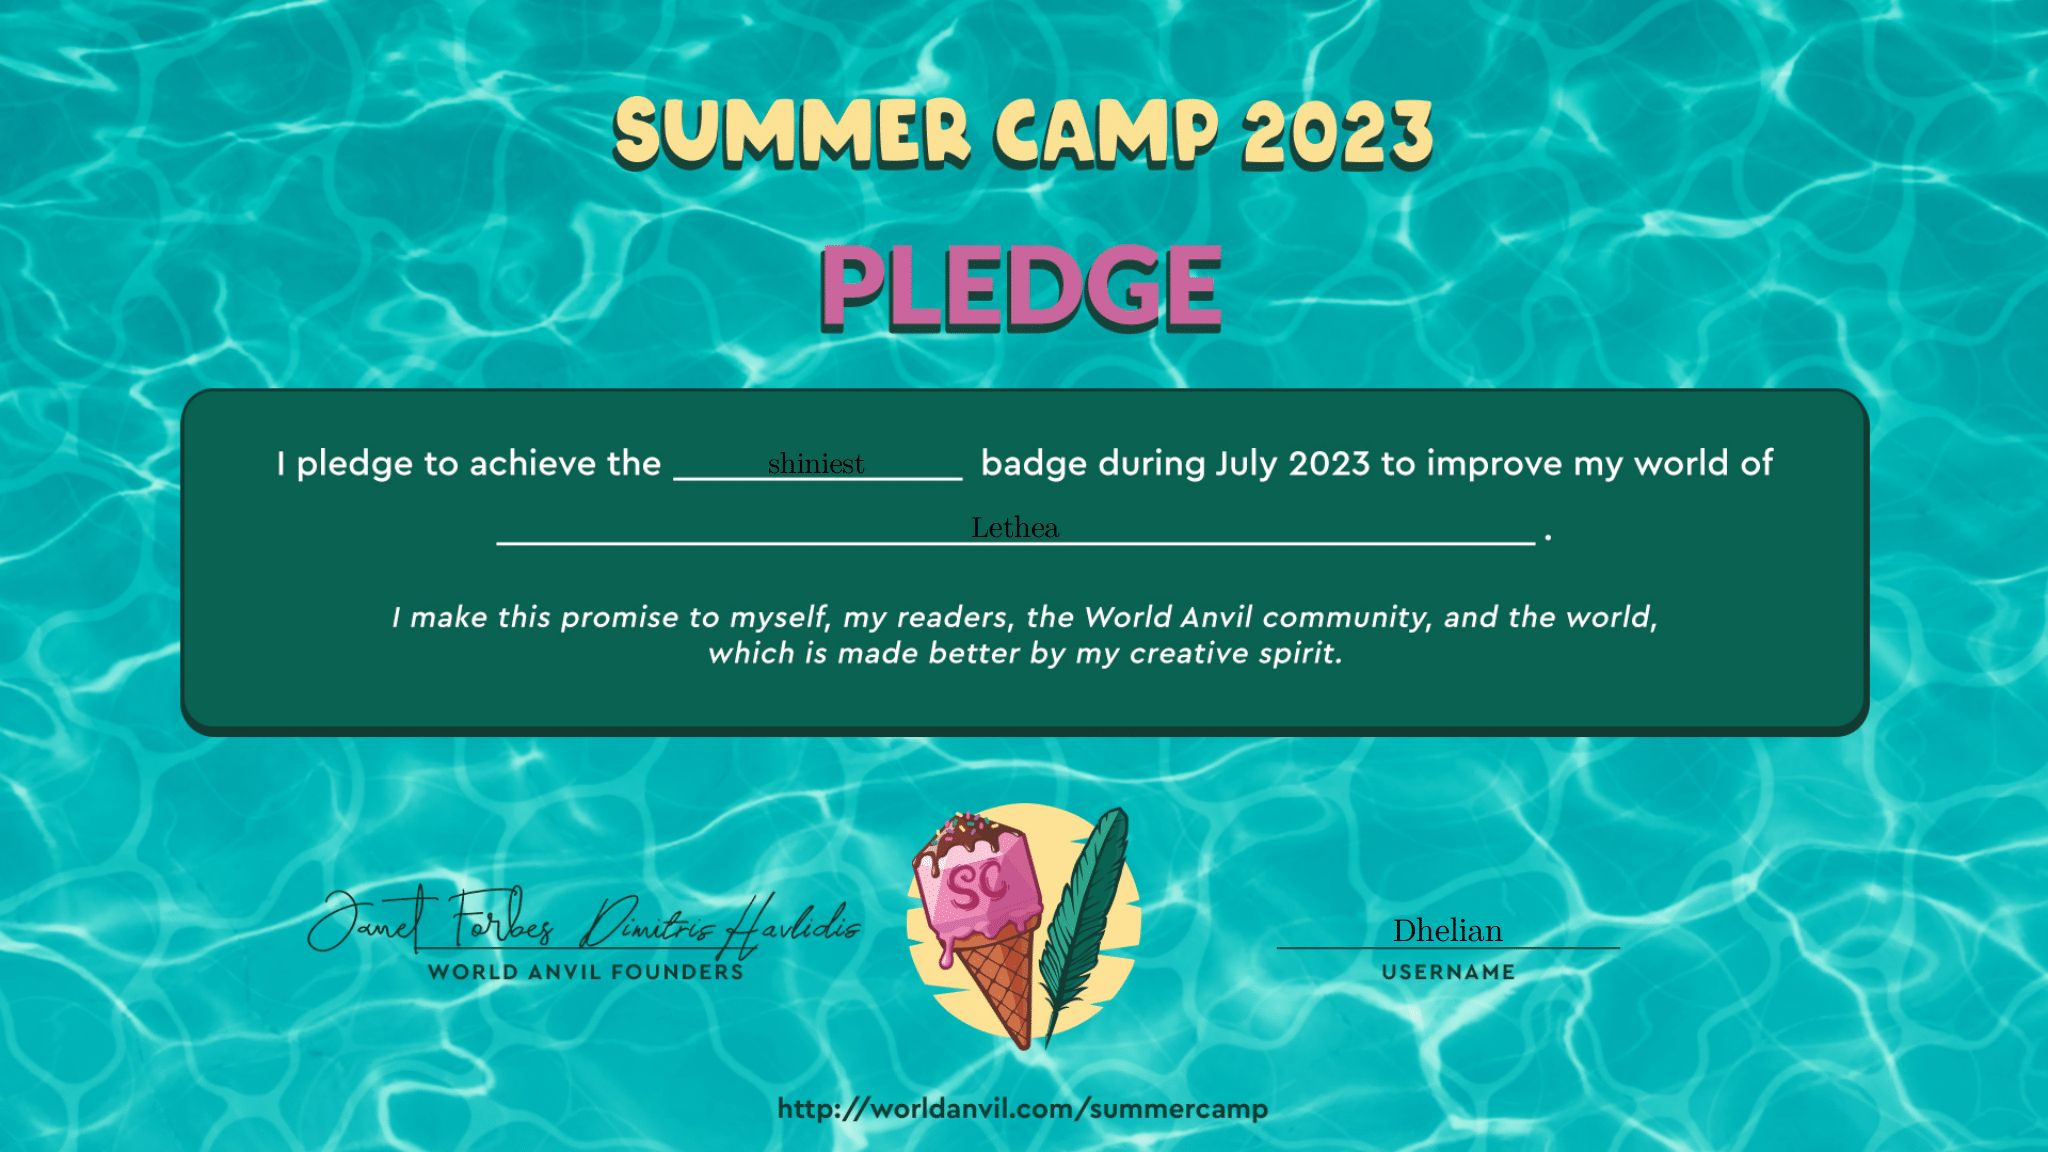 Summer Camp 2023 Pledge Fillable Form.jpg